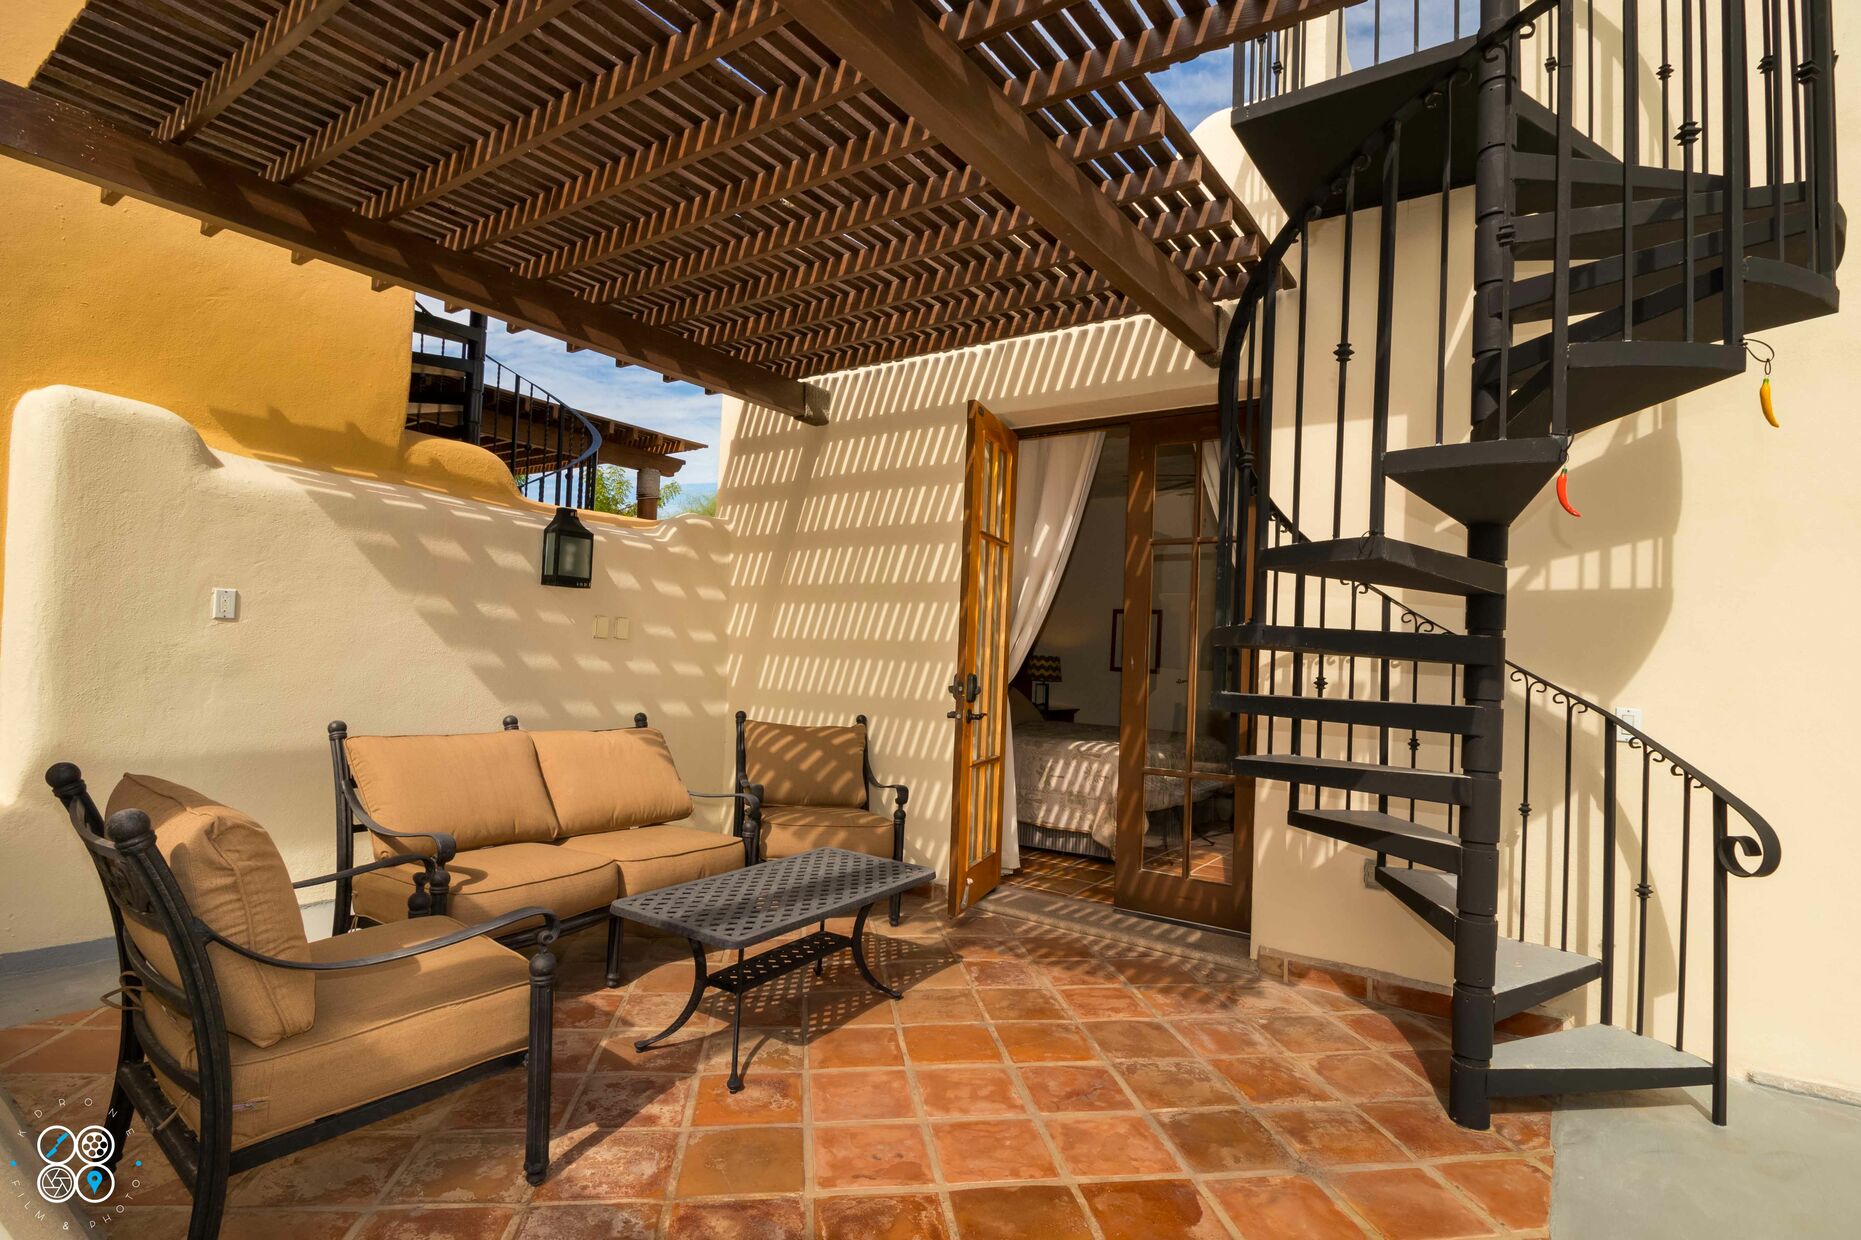 Deck / terrace, Patio Furniture, Pergola